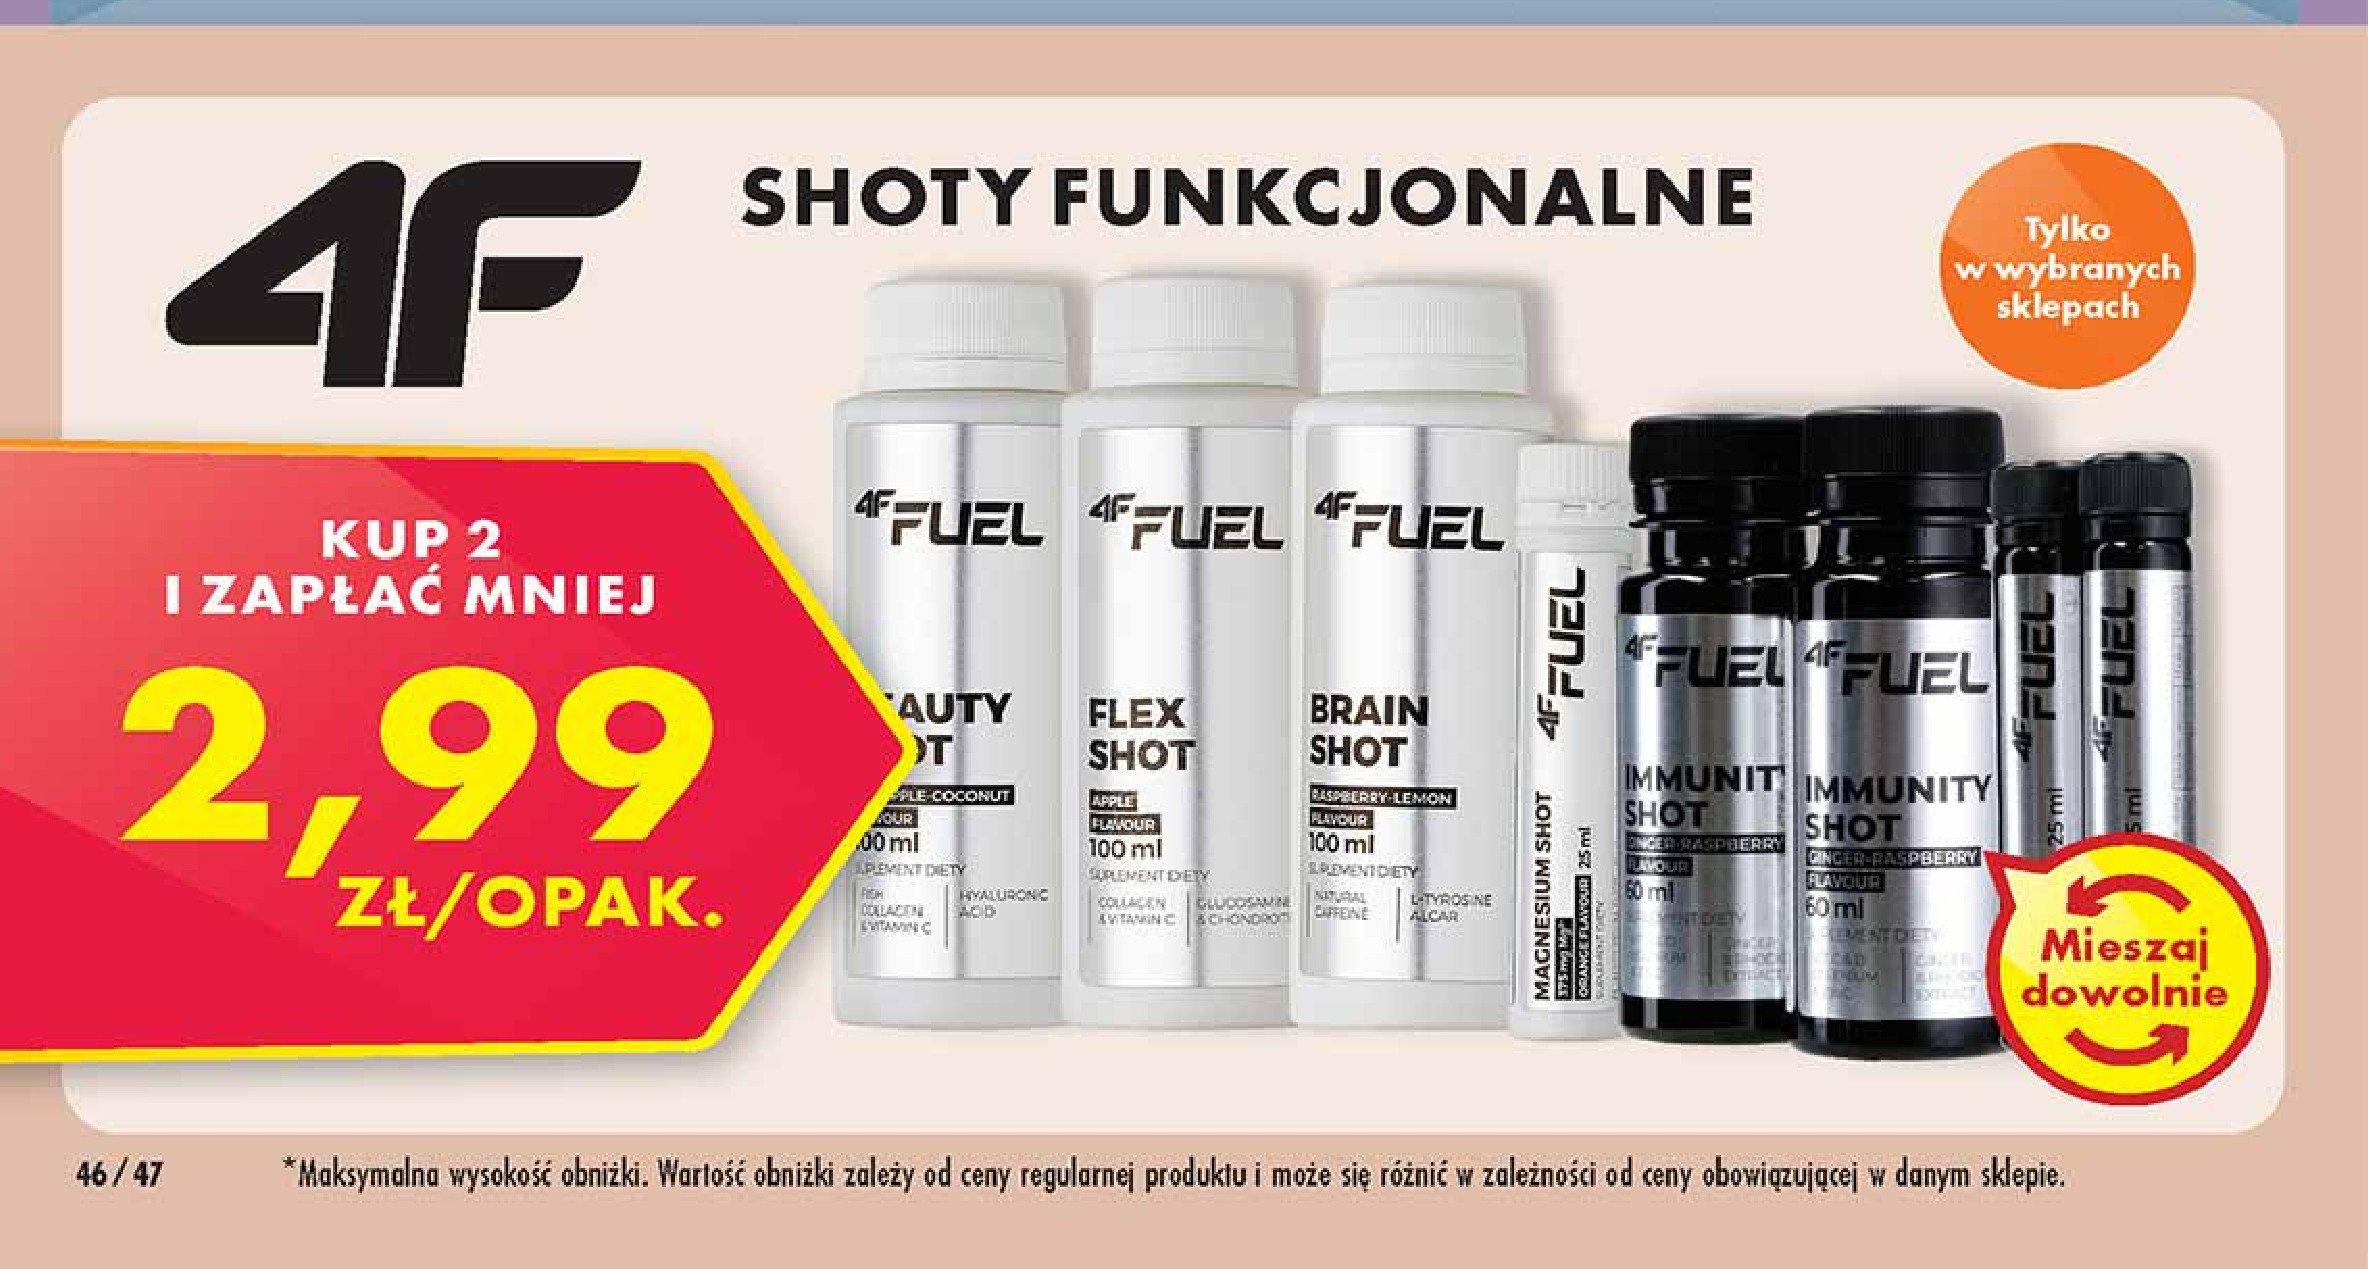 Shot immunity 4f fuel promocje